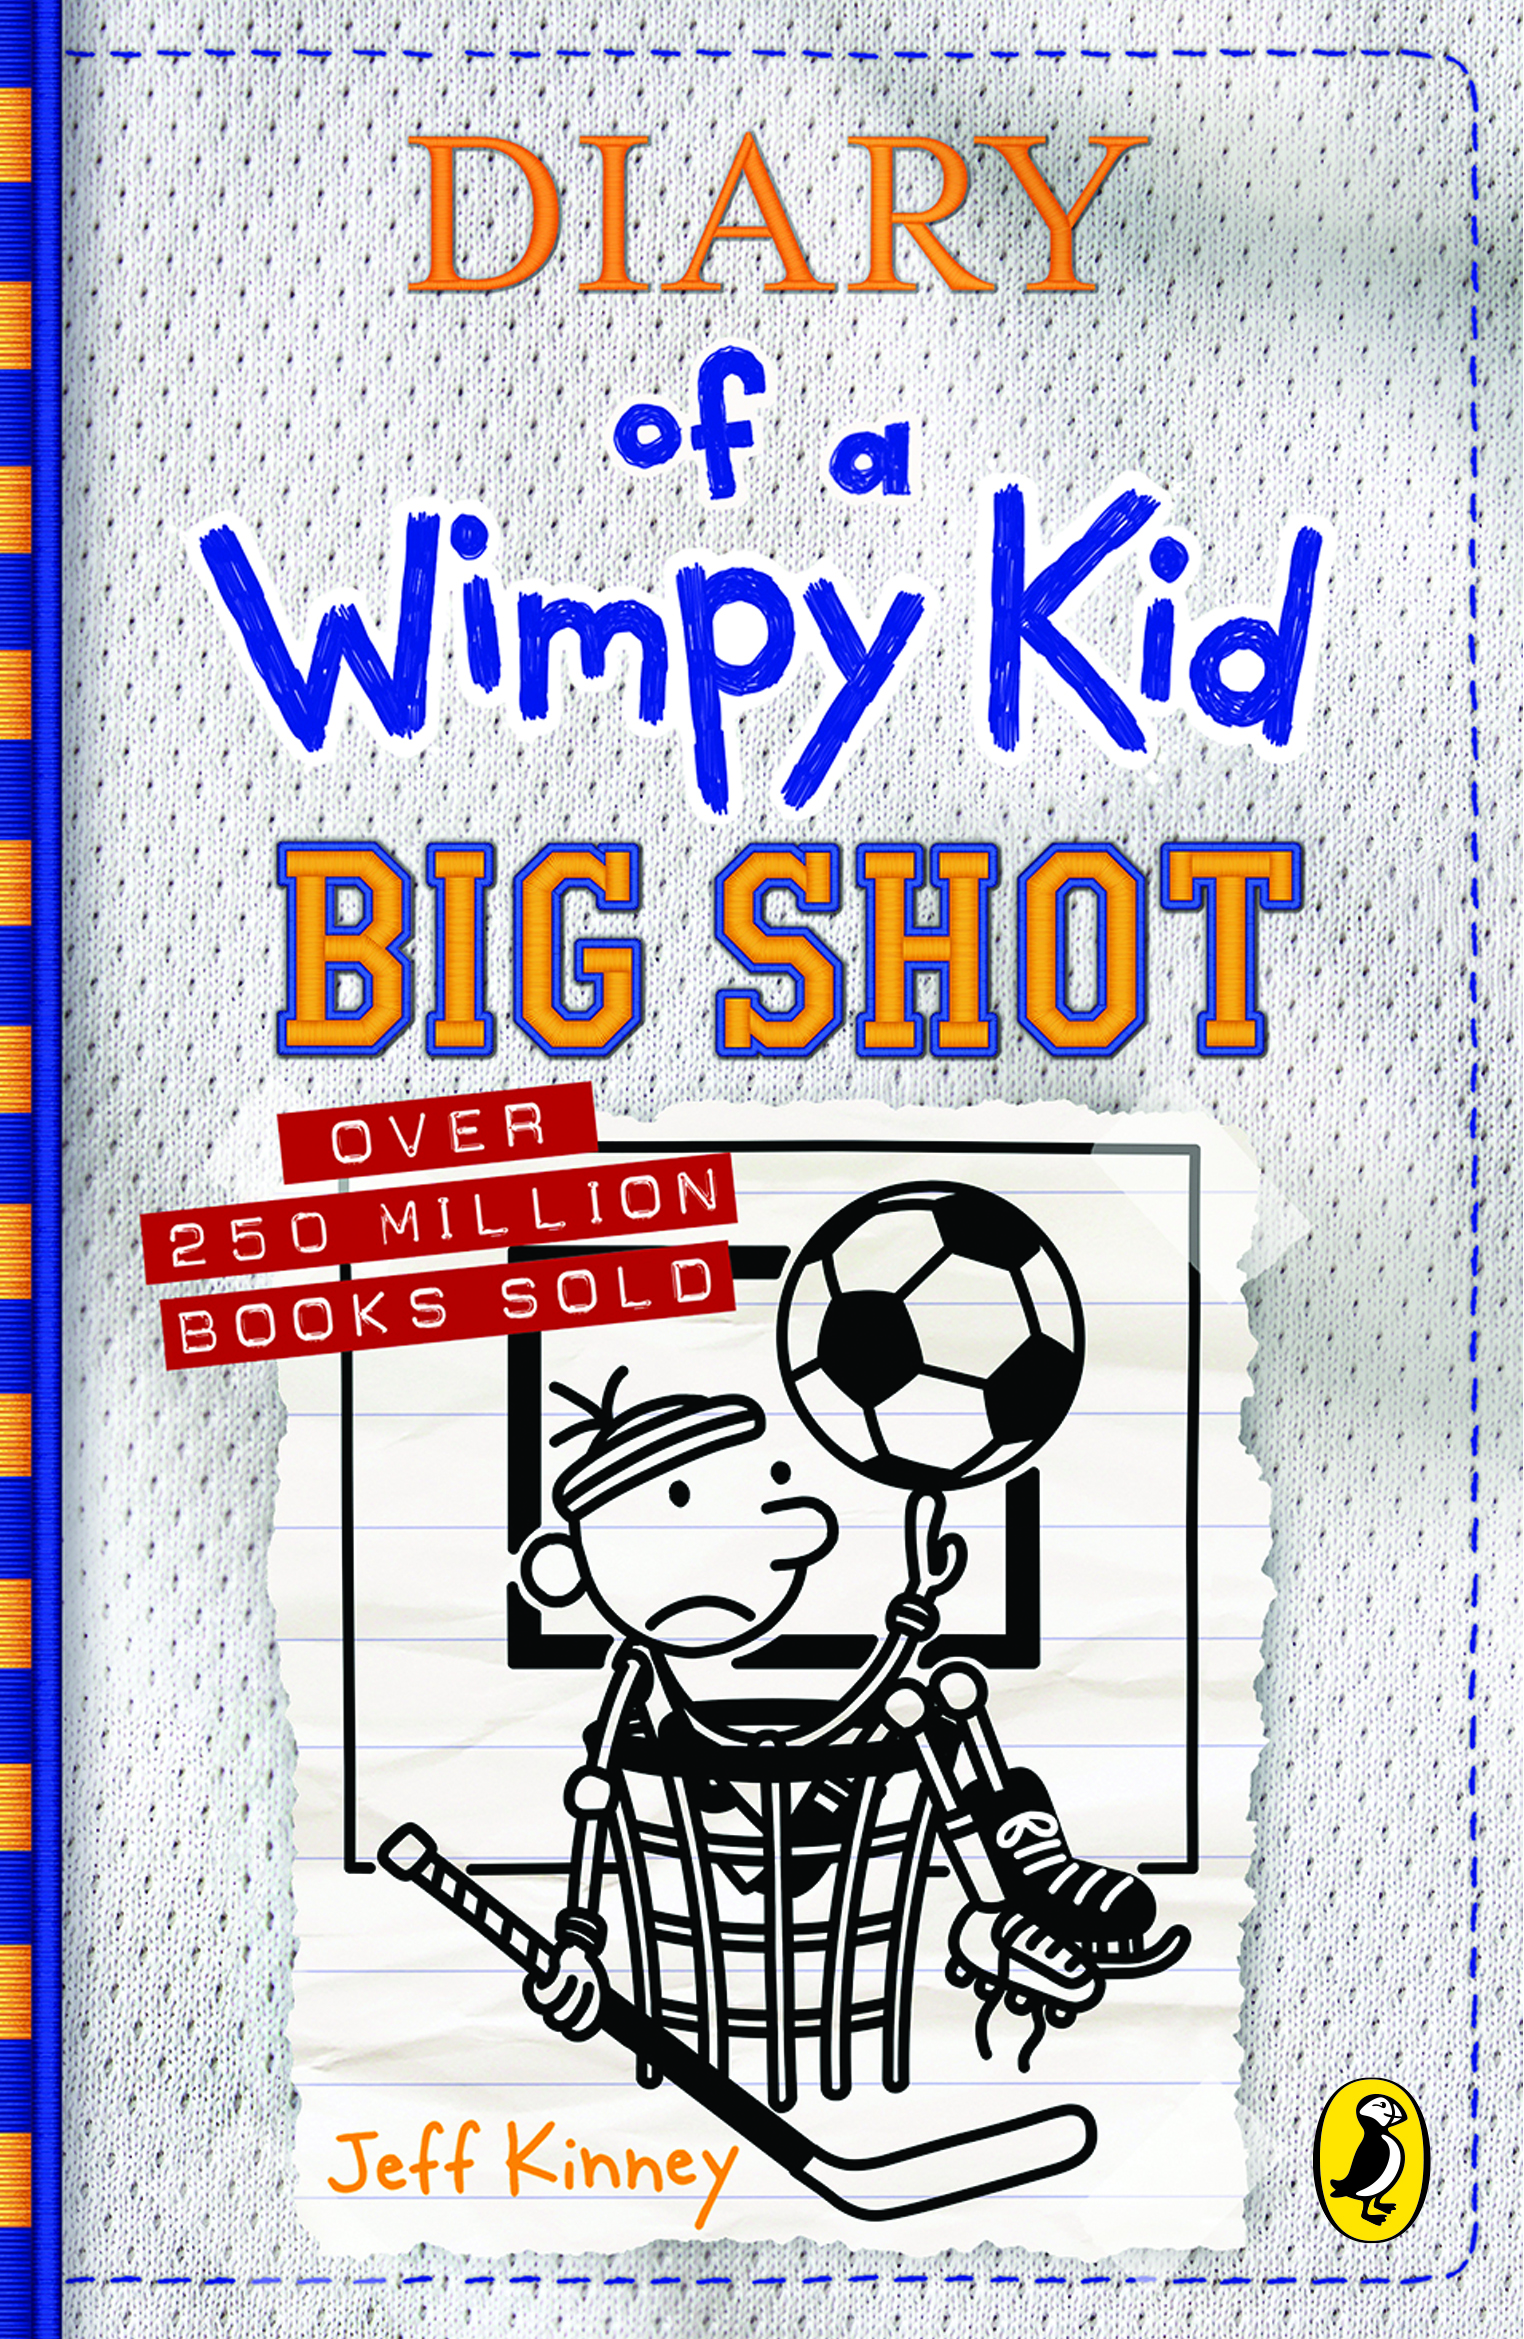 jeff kinney biography for kids